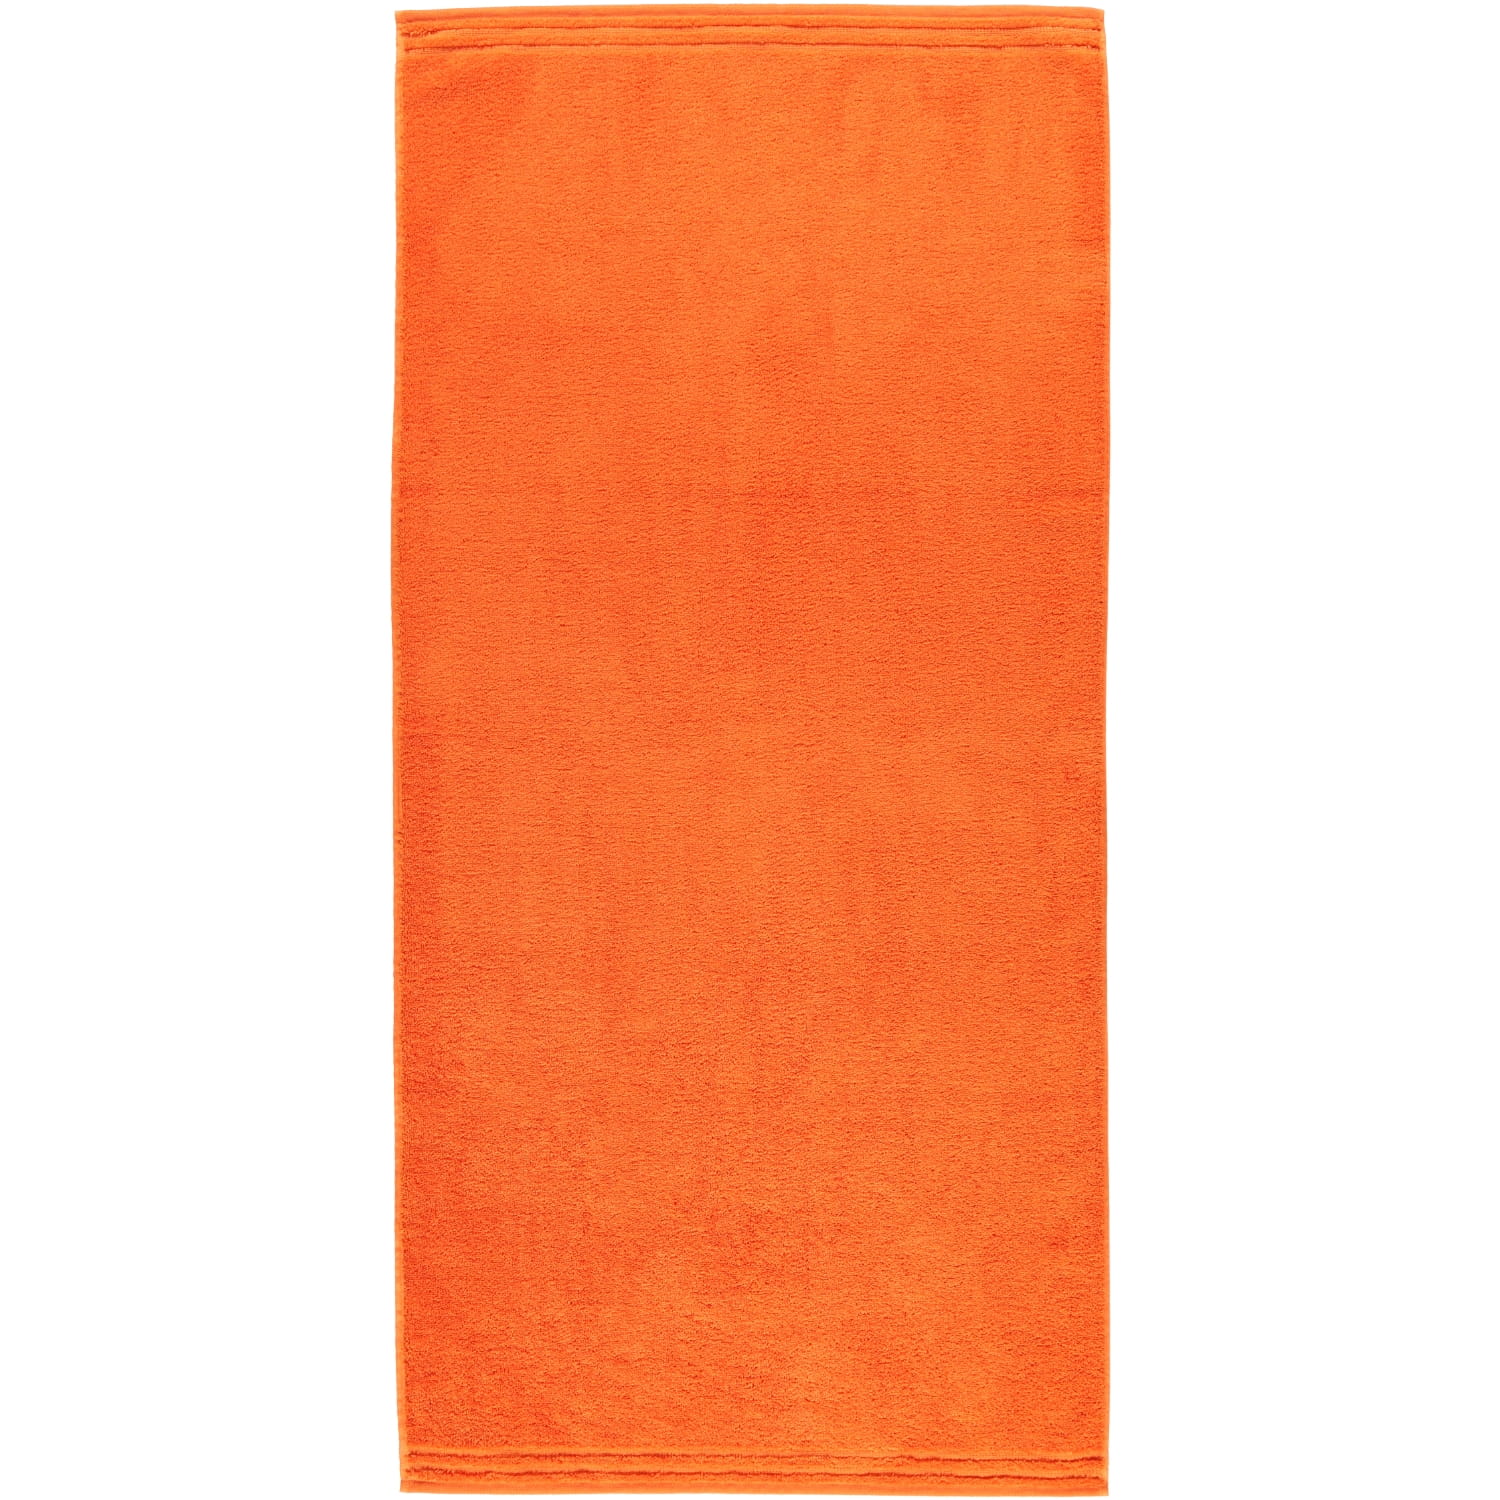 Vossen Calypso Feeling - - Marken Vossen Farbe: Vossen | 255 orange Handtücher | 